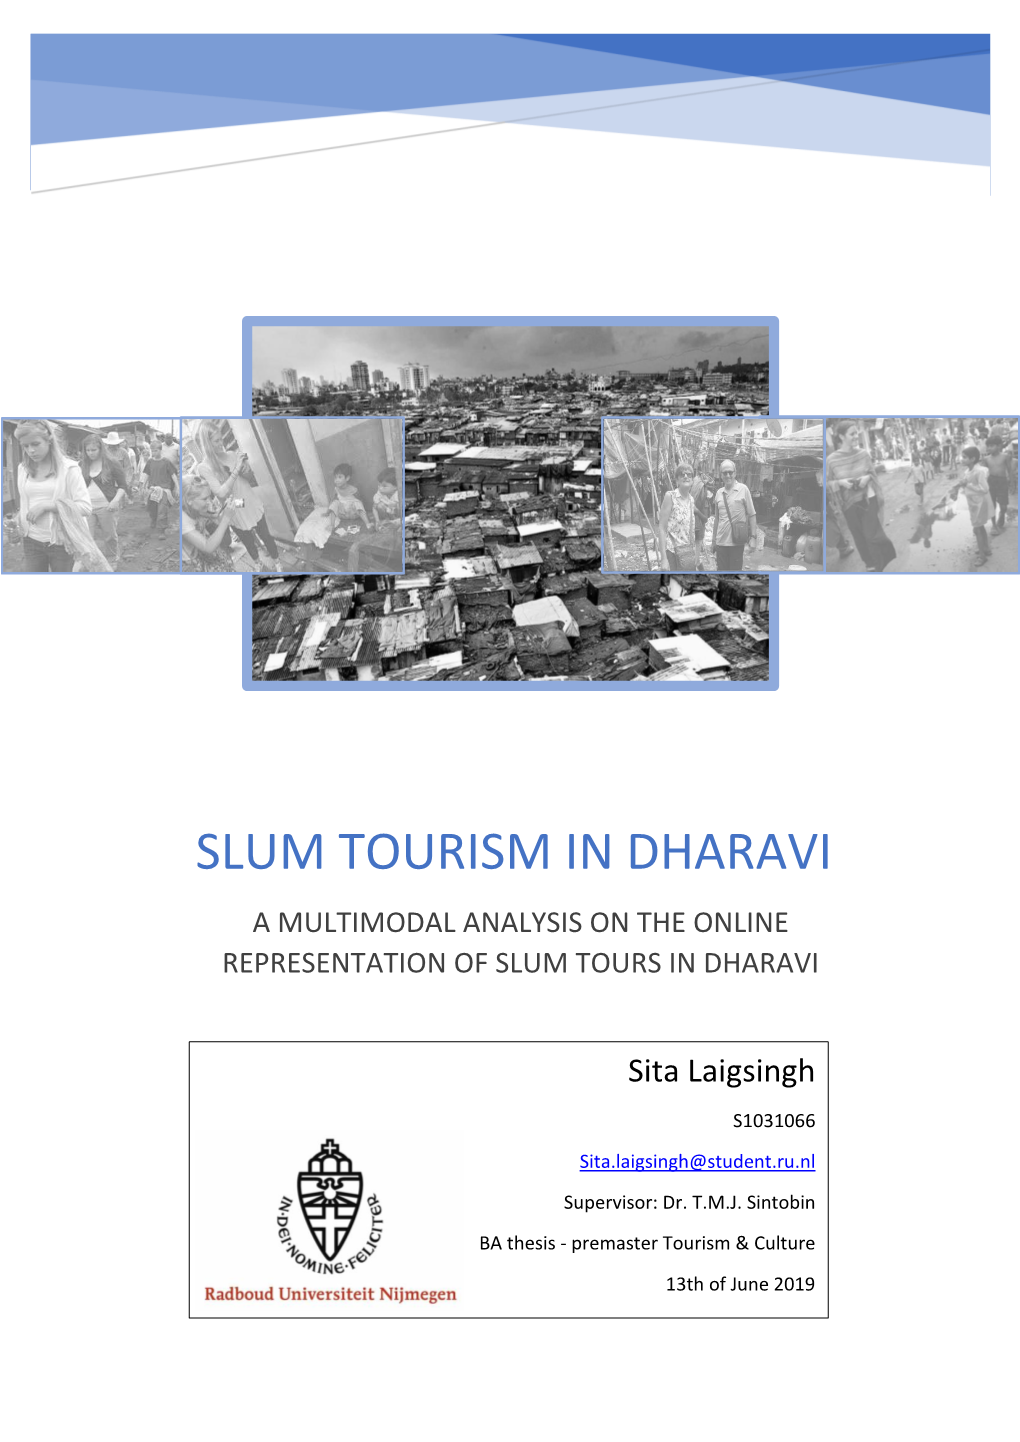 Slum Tourism in Dharavi a Multimodal Analysis on the Online Representation of Slum Tours in Dharavi